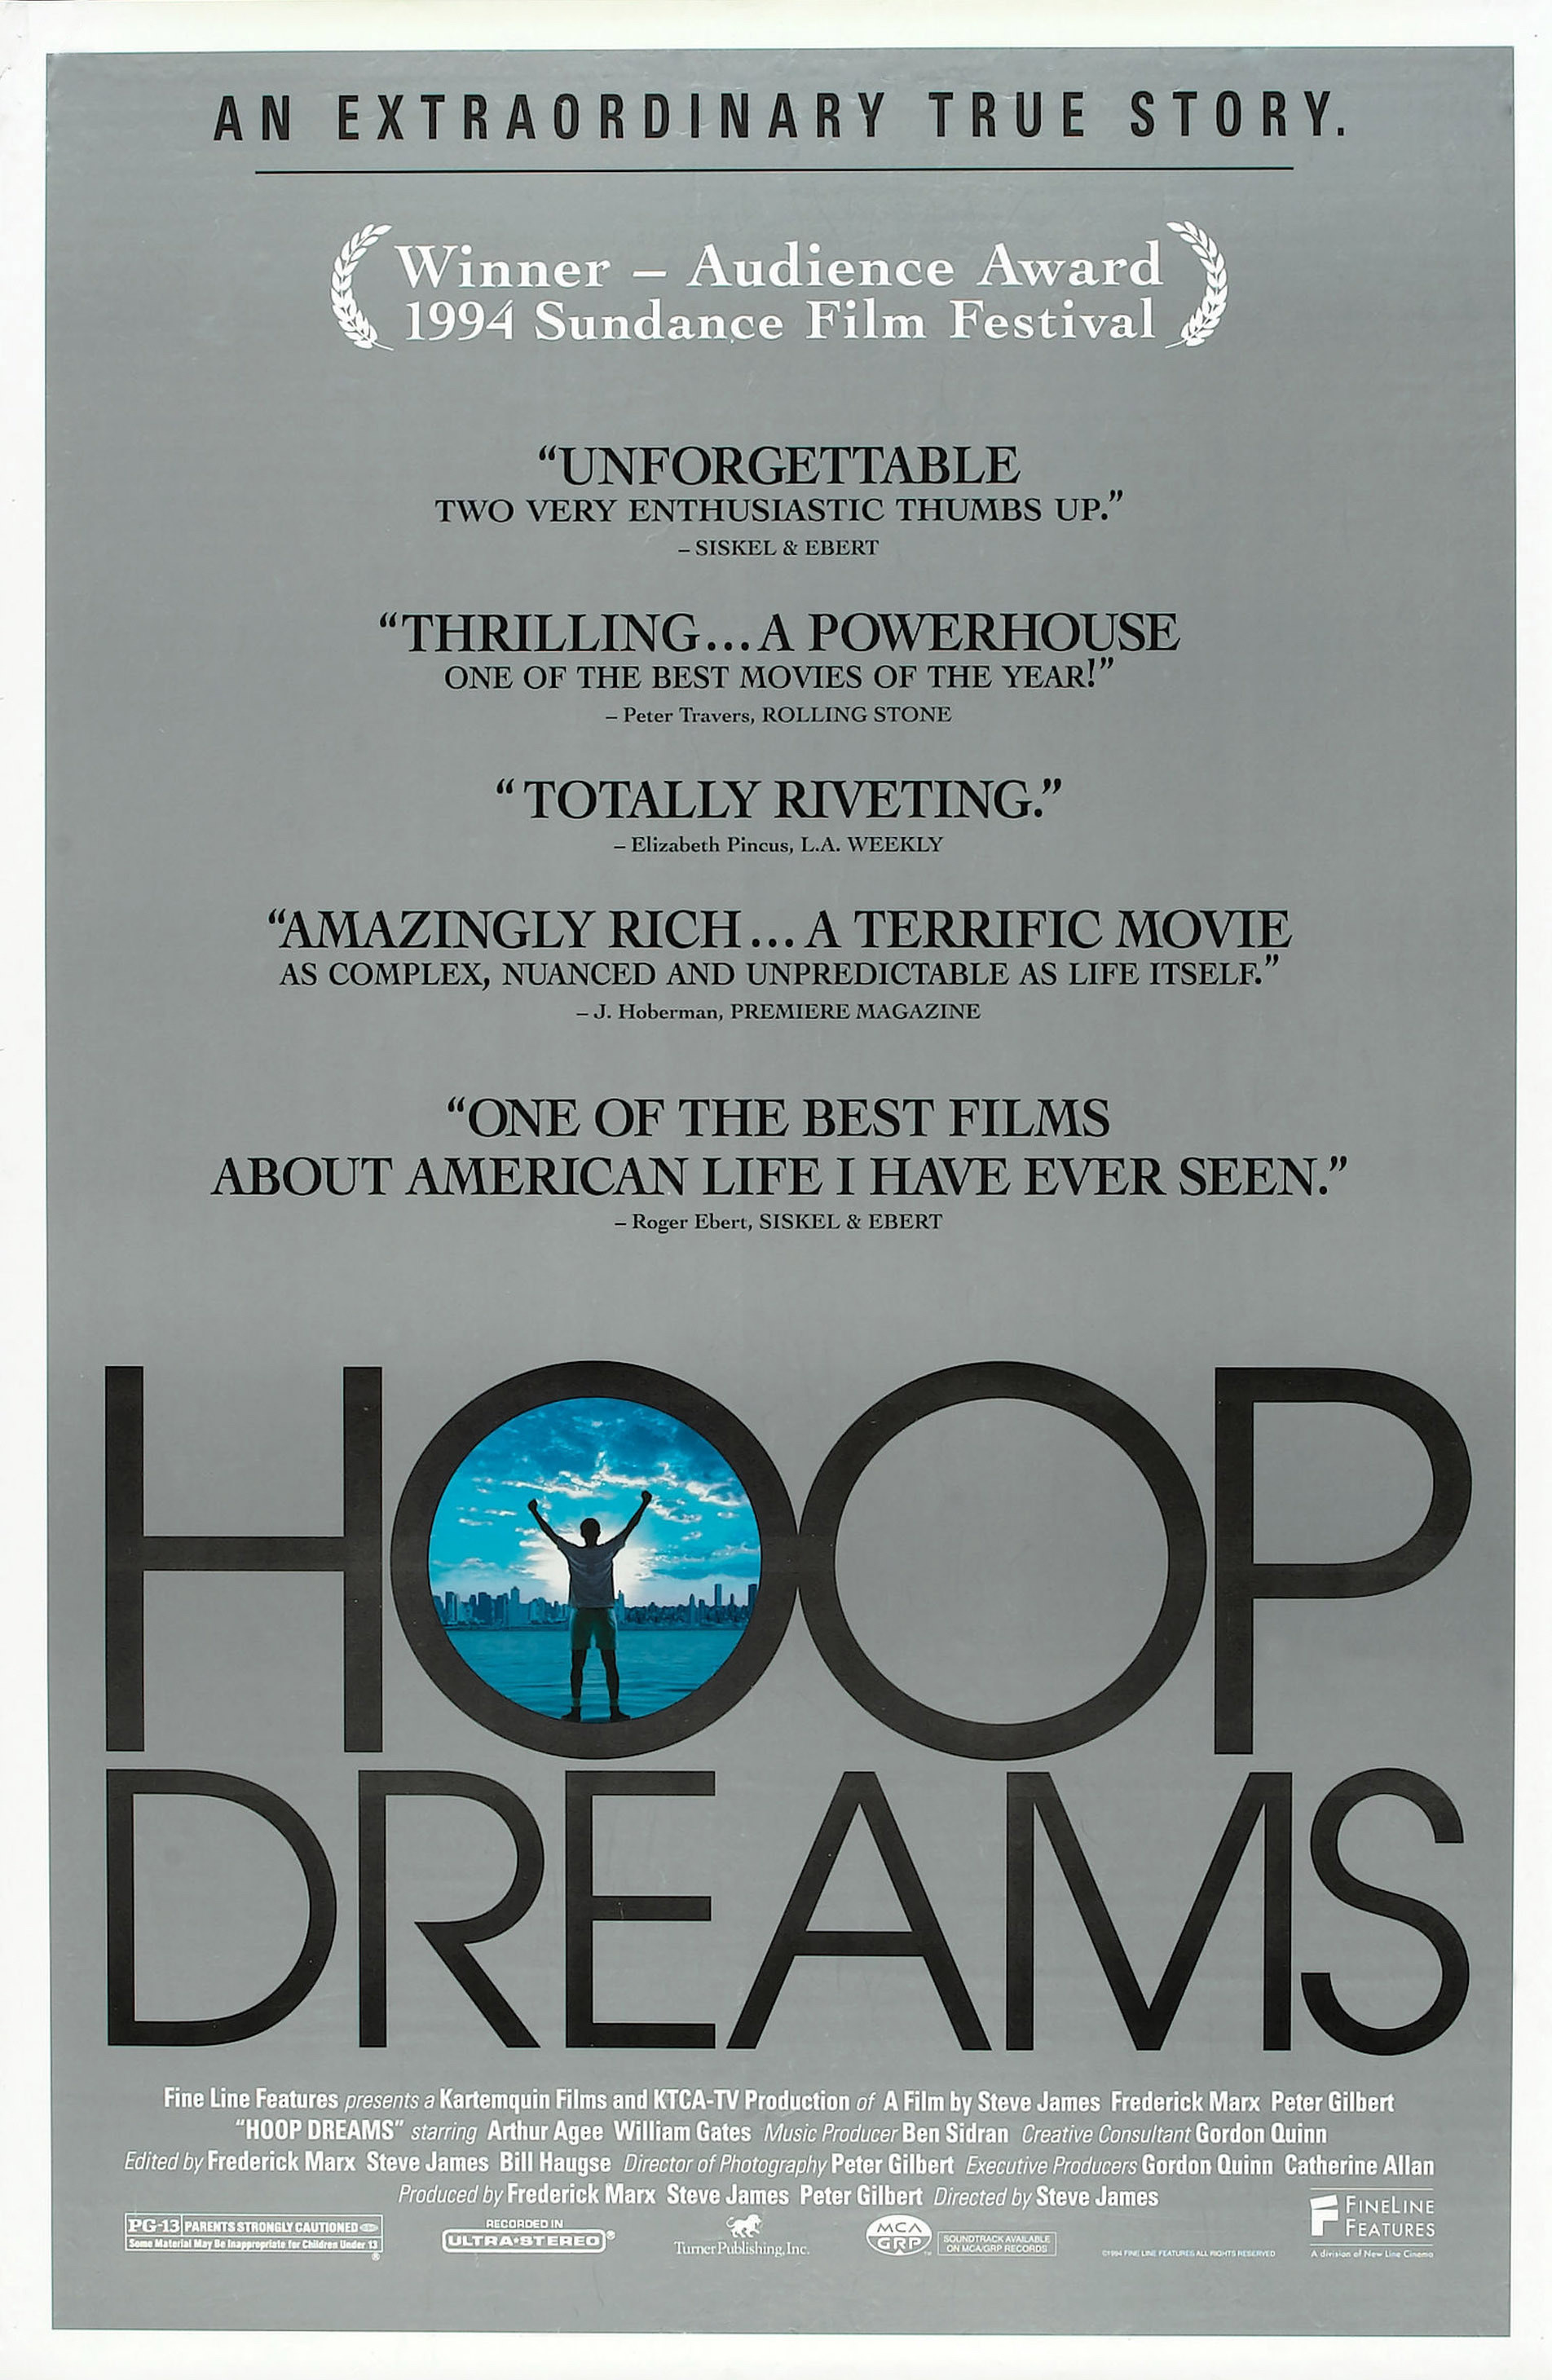 A grey movie poster for Hoop Dreams